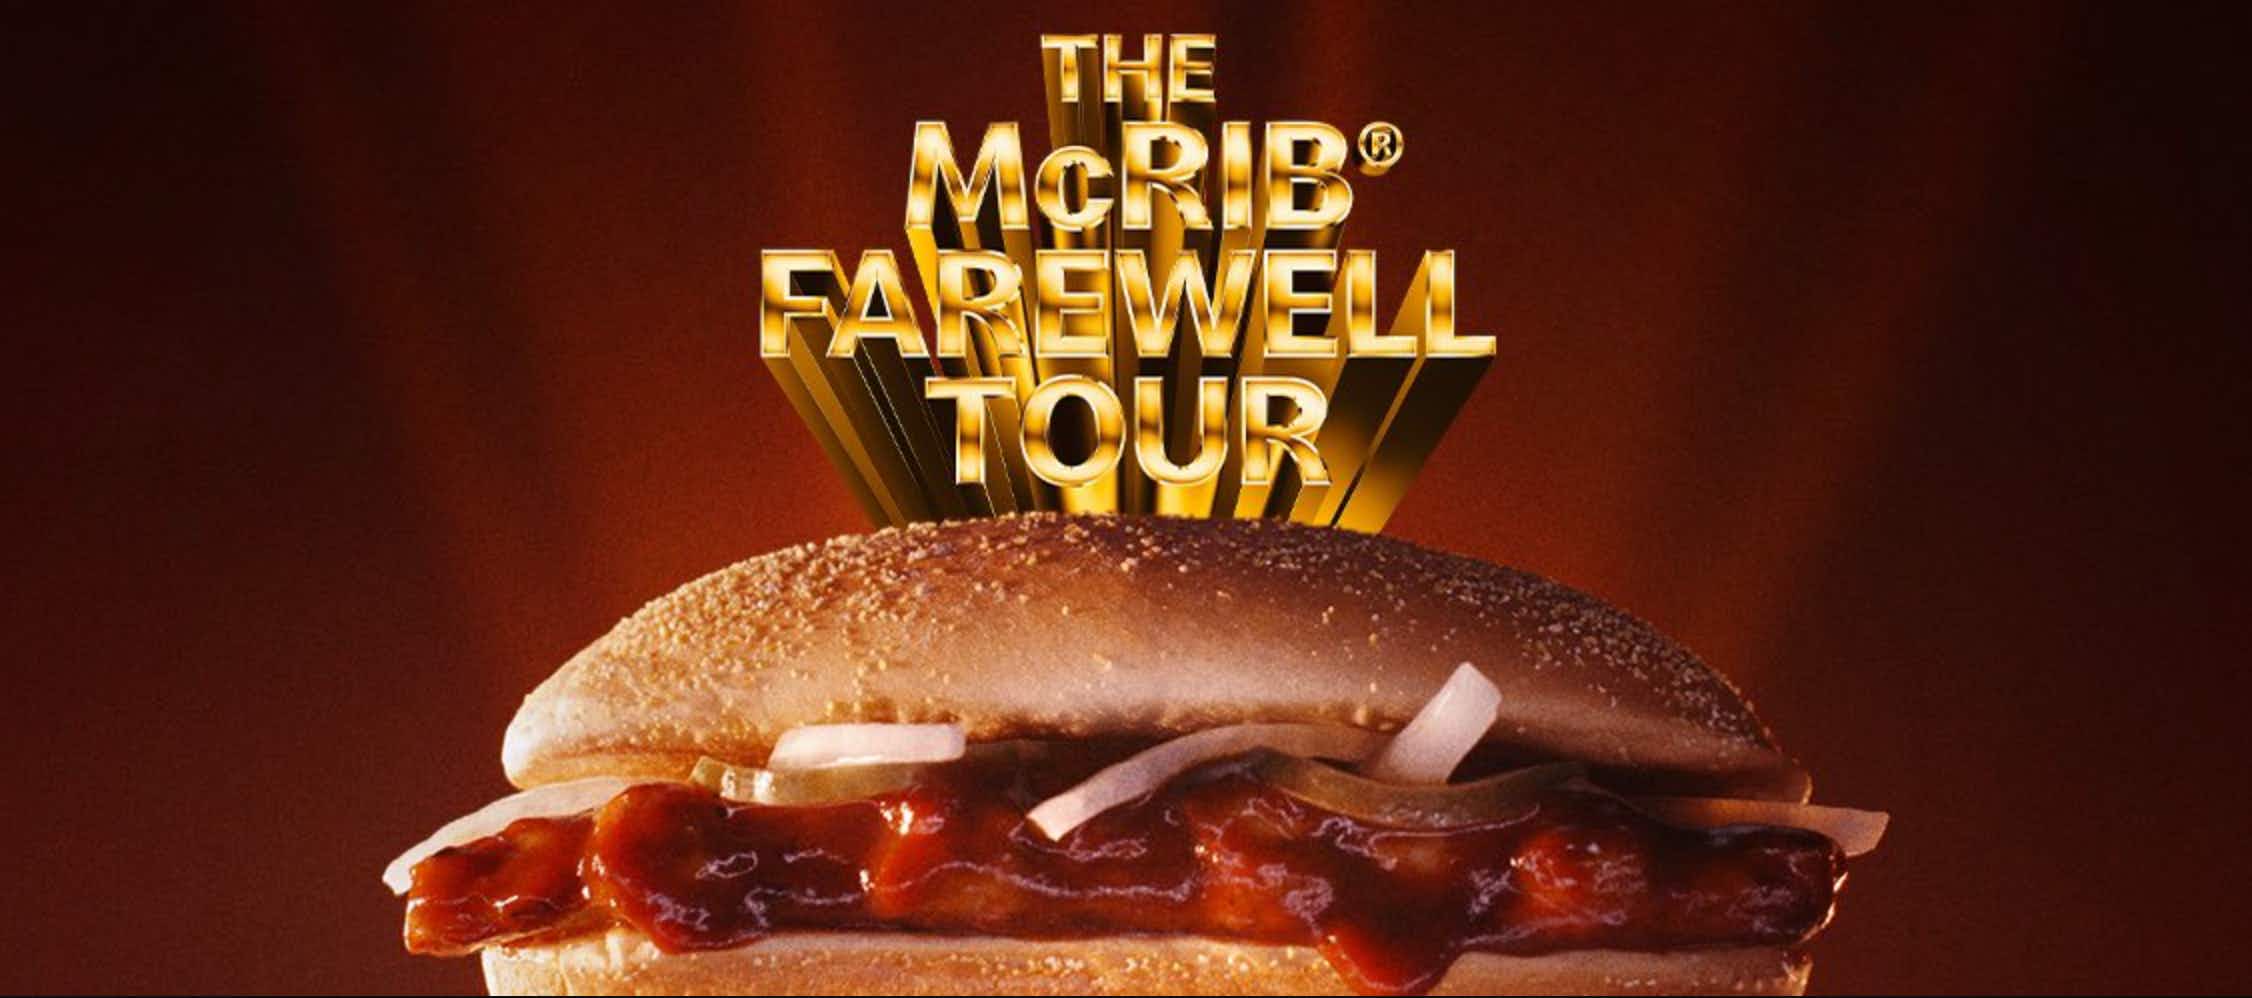 McDonald's imagery for the McRib farewell tour 2022